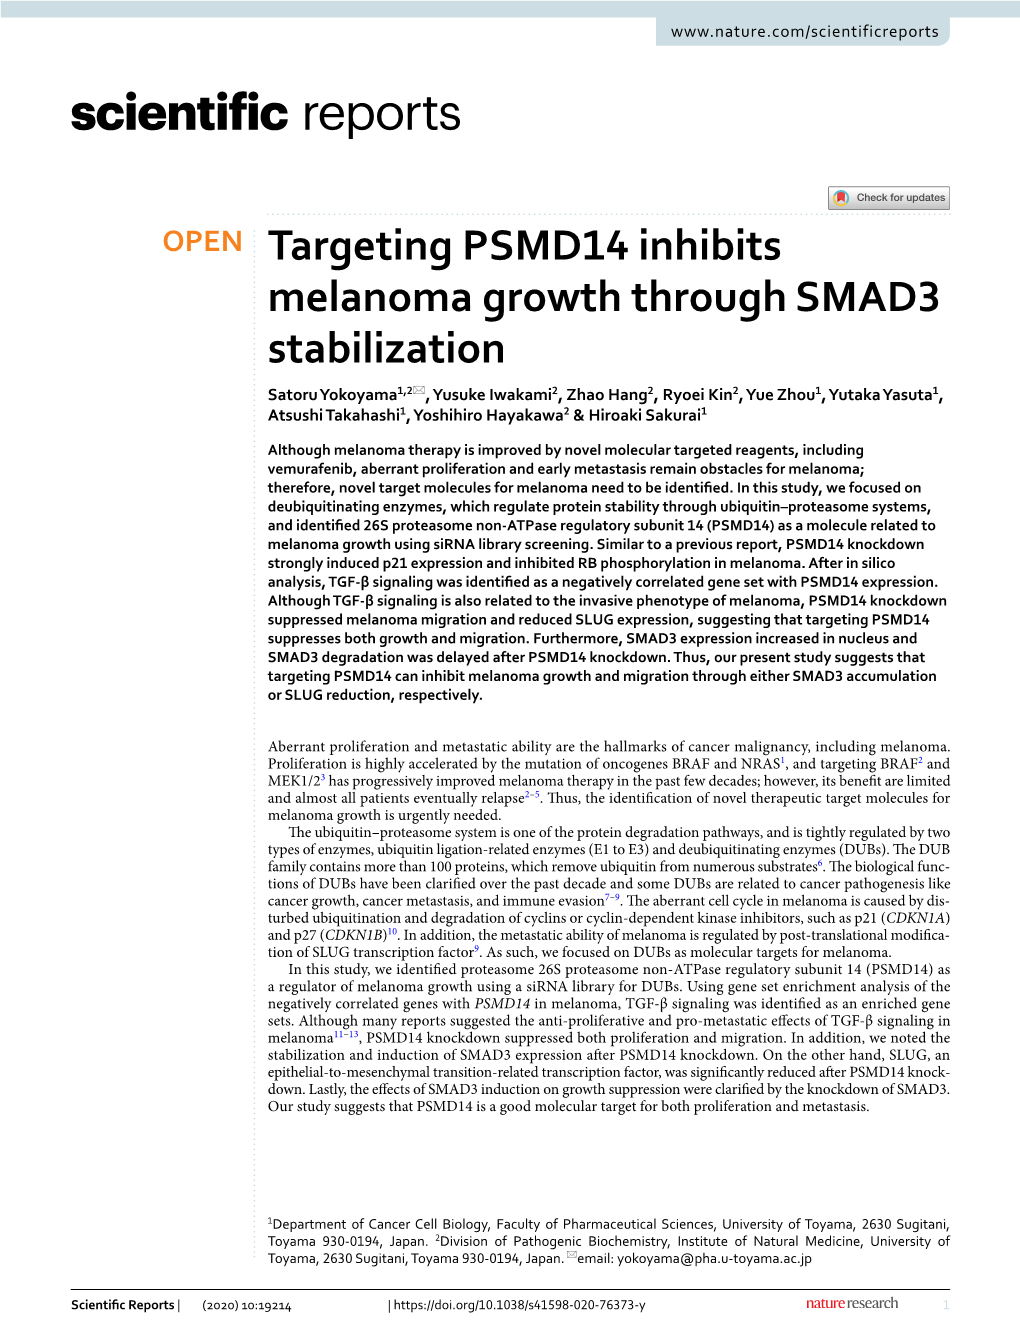 Targeting PSMD14 Inhibits Melanoma Growth Through SMAD3 Stabilization